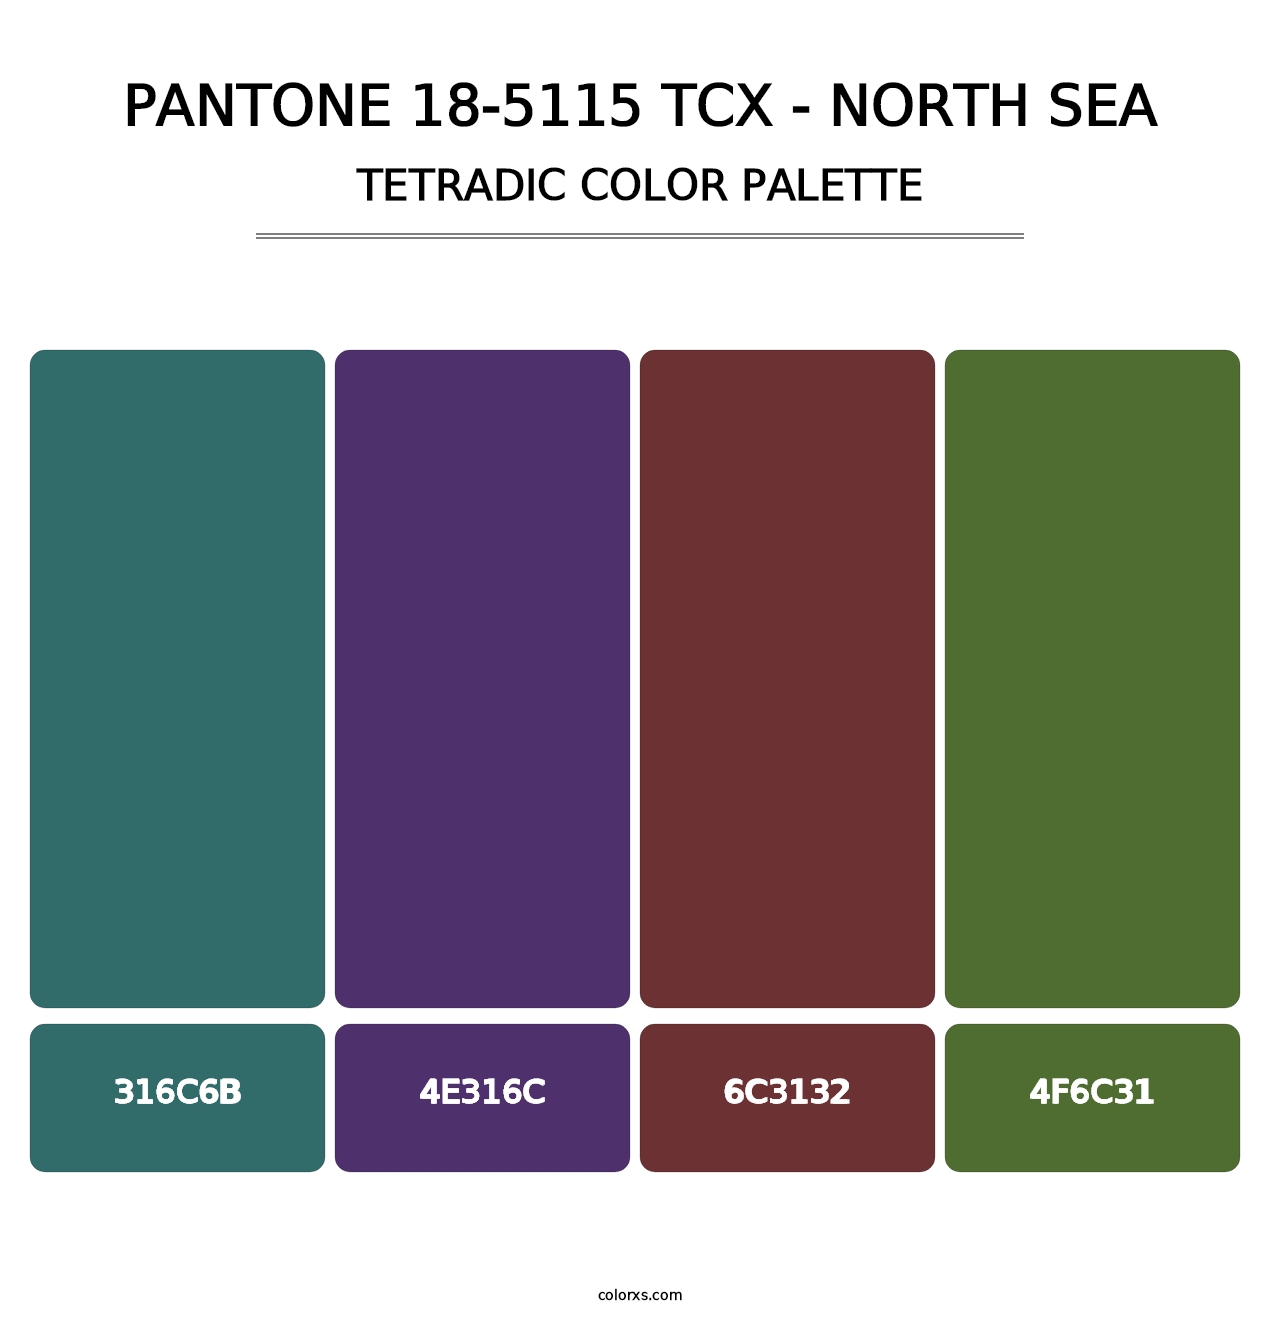 PANTONE 18-5115 TCX - North Sea - Tetradic Color Palette